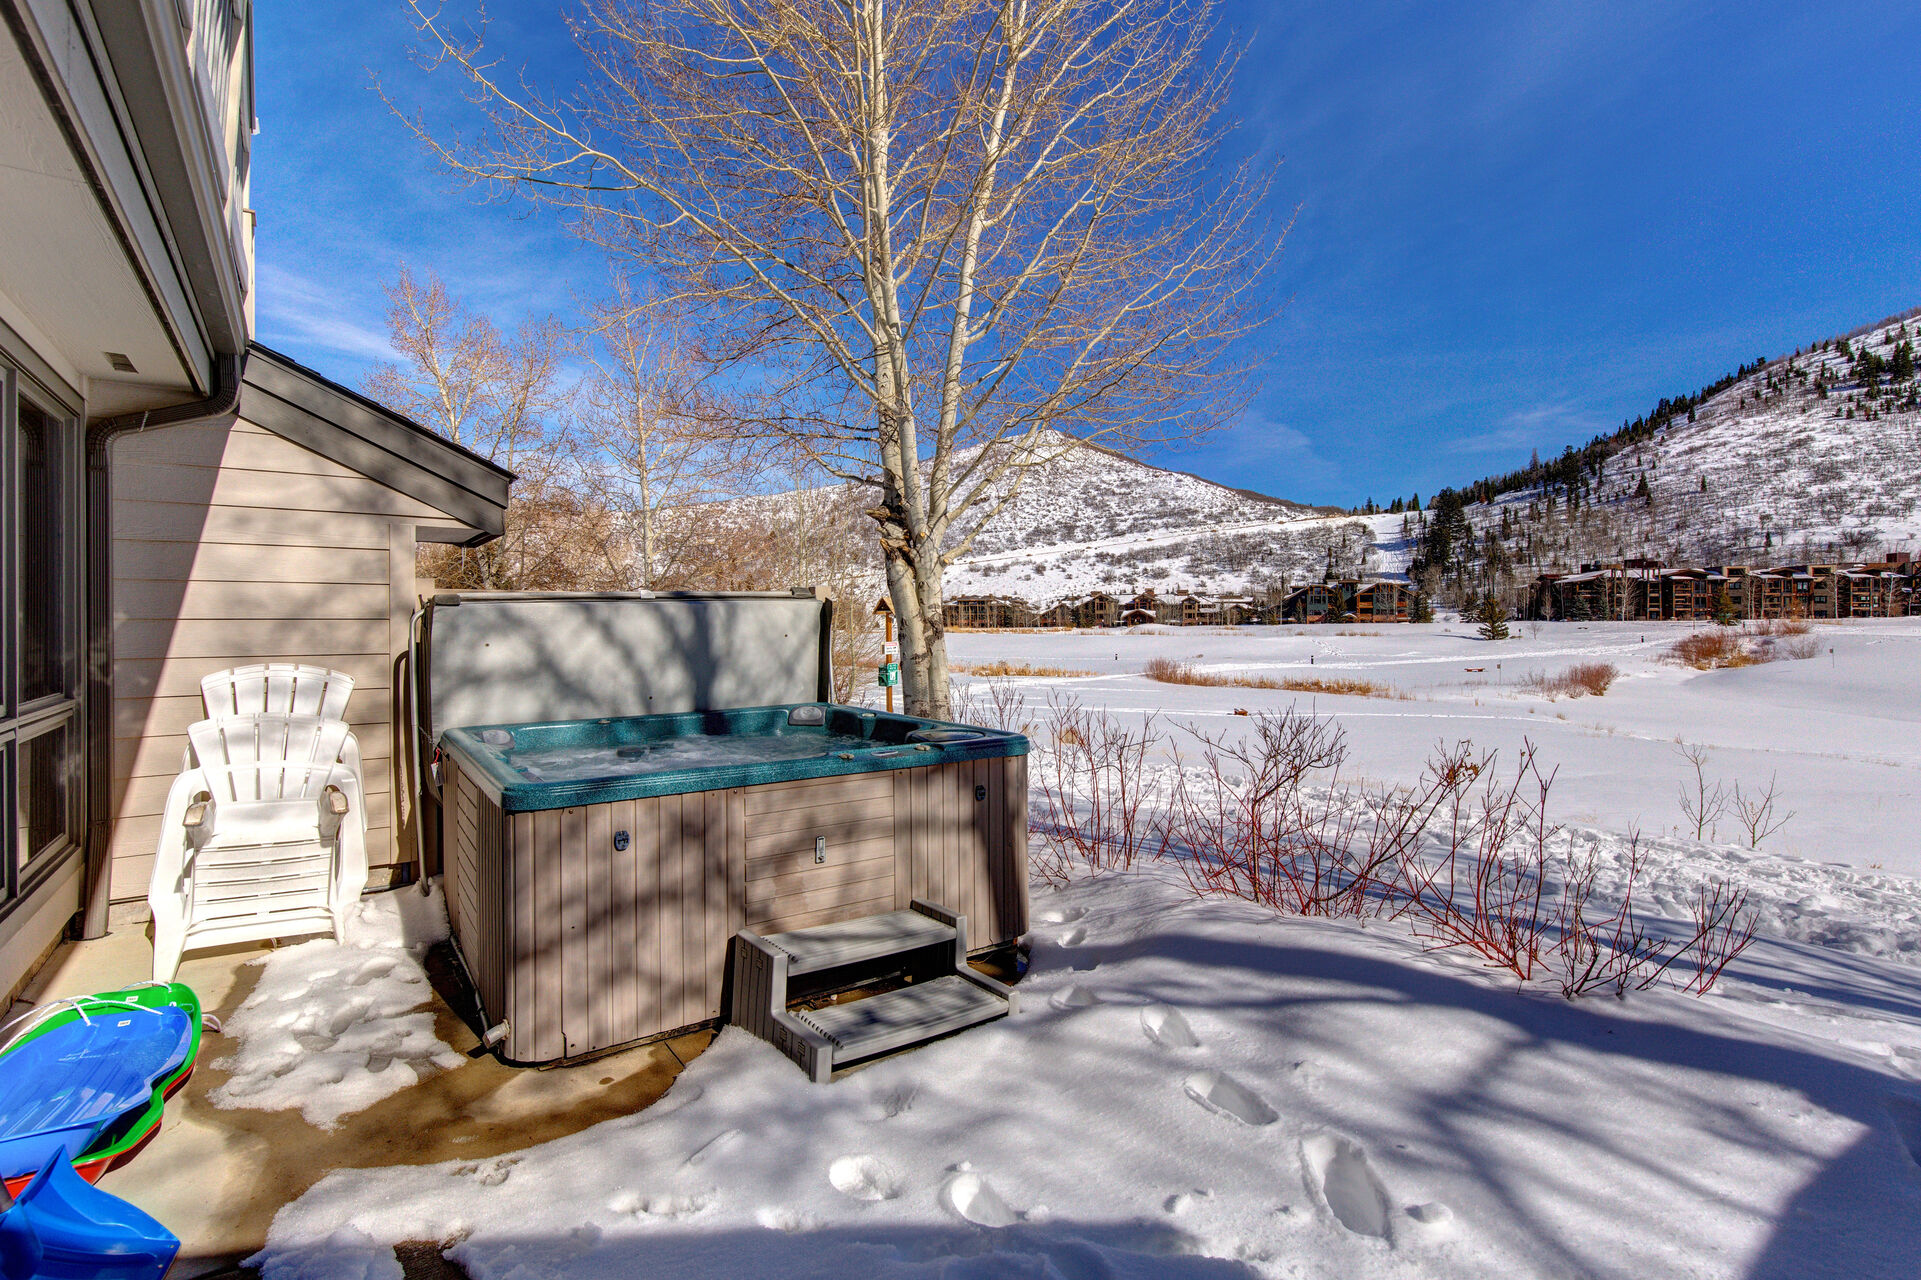 Private hot tub patio overlooking Deer Valley resort